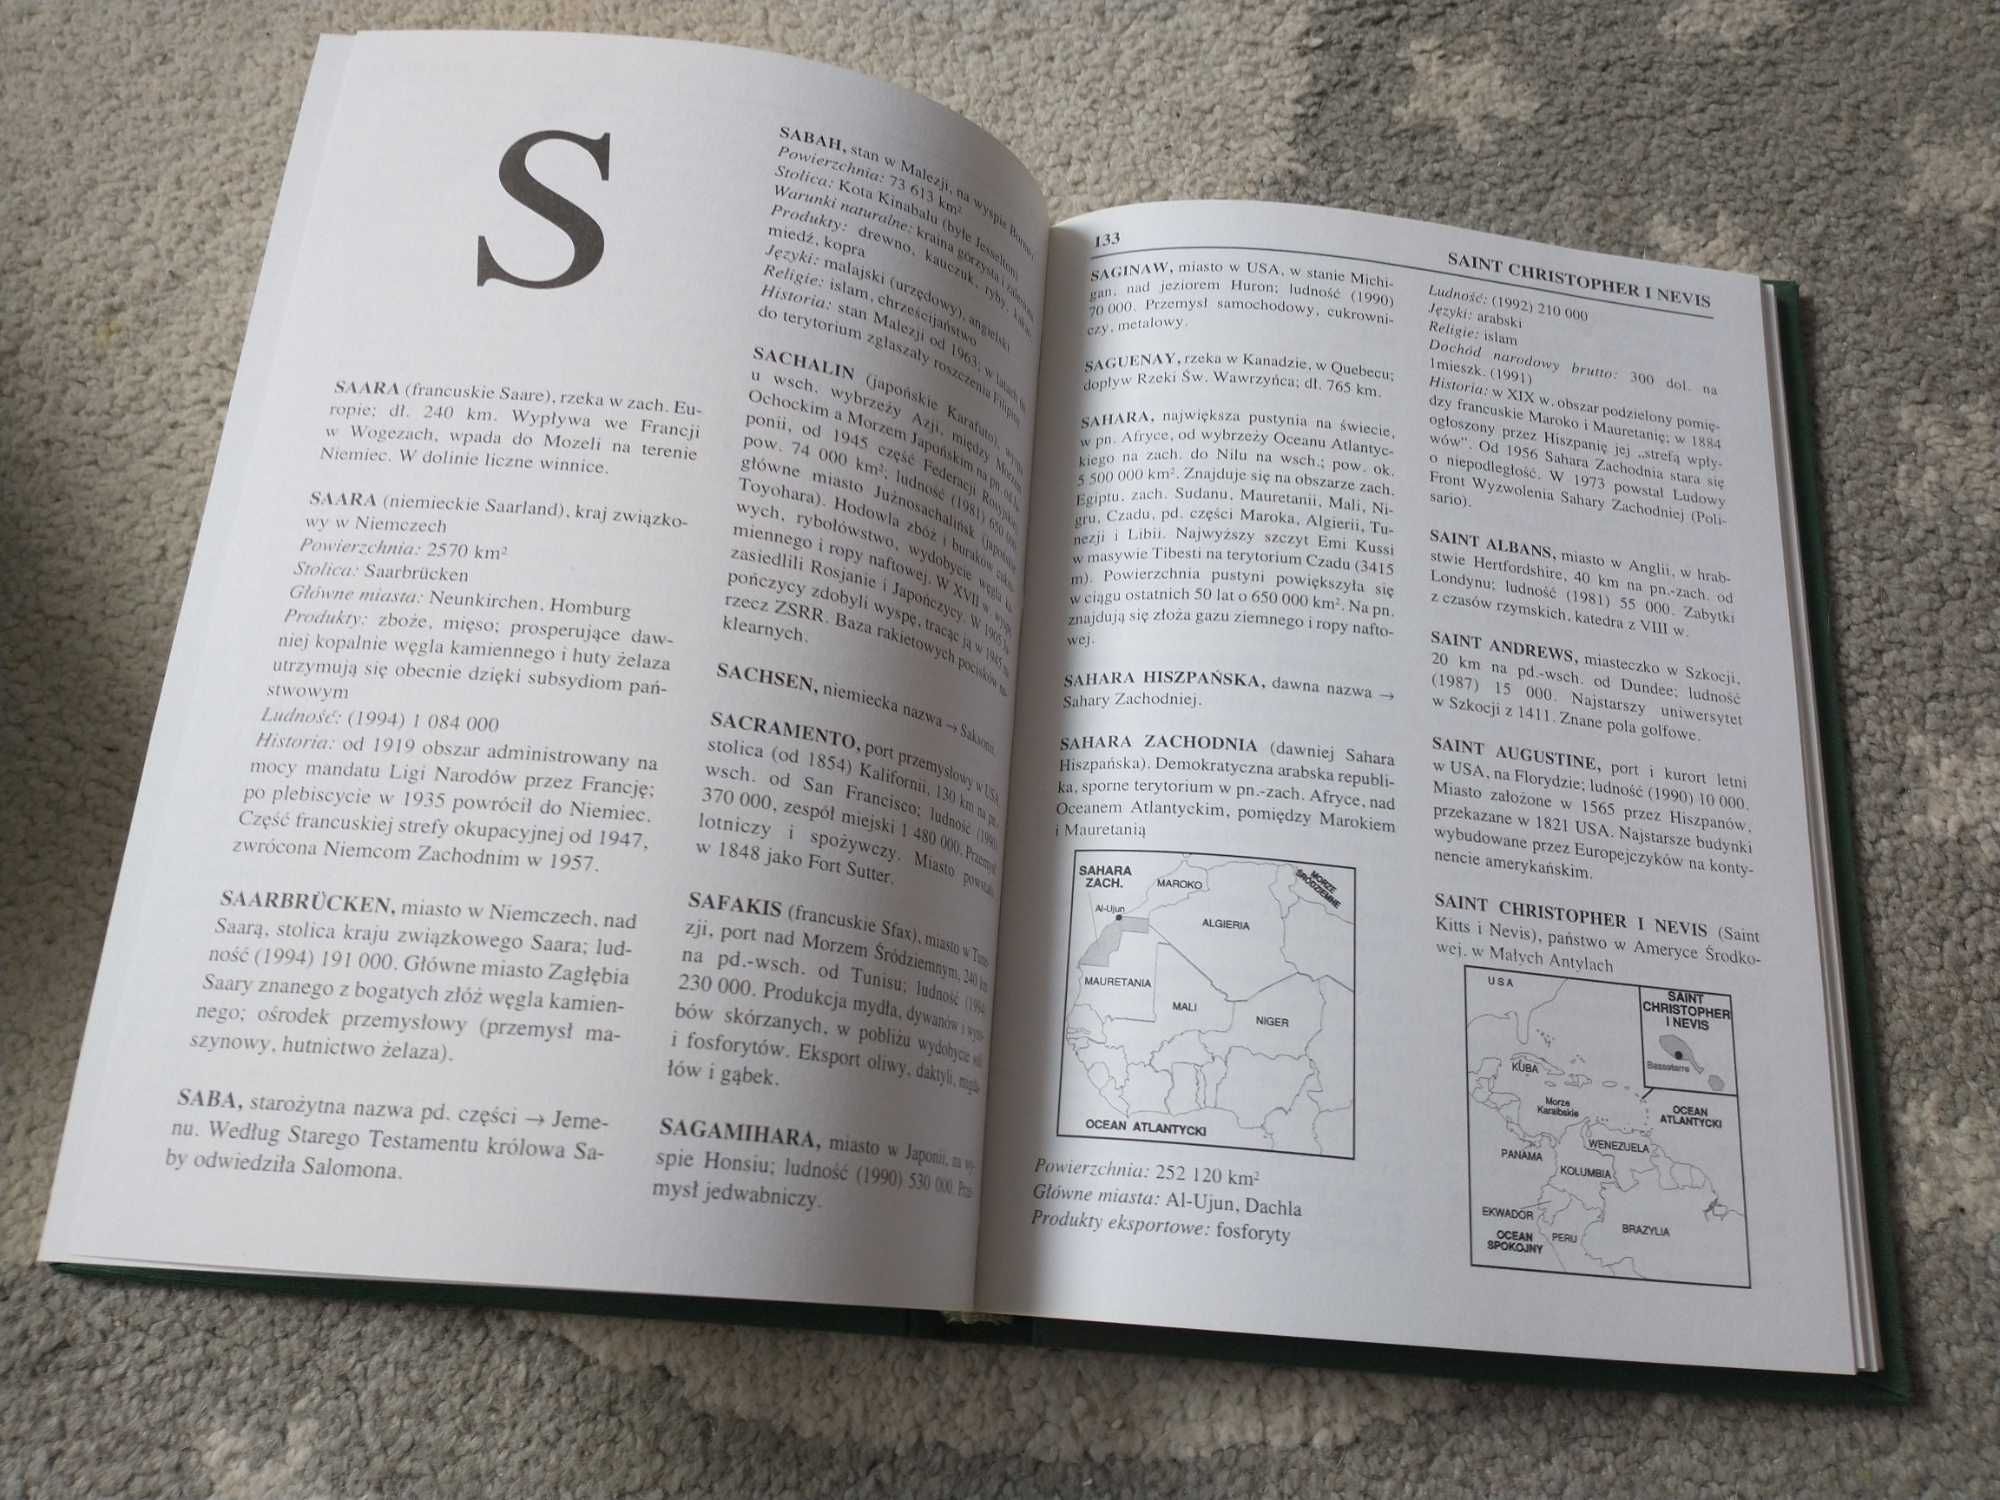 Encyklopedia powszechna Geografia od L-Ż